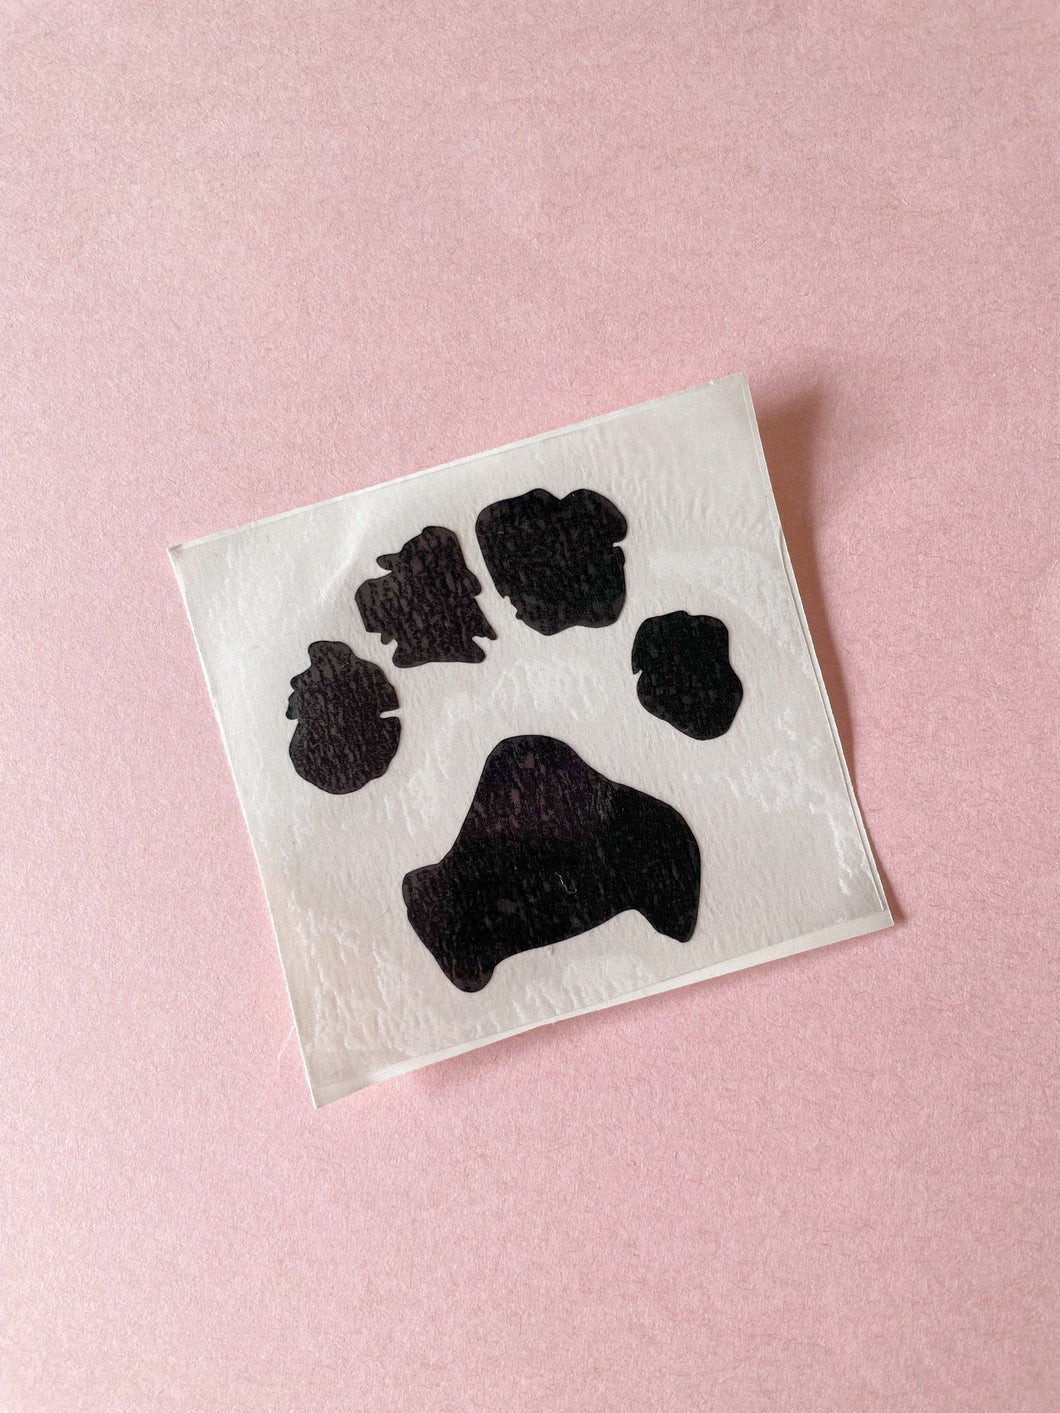 custom paw print vinyl sticker on backing sheet